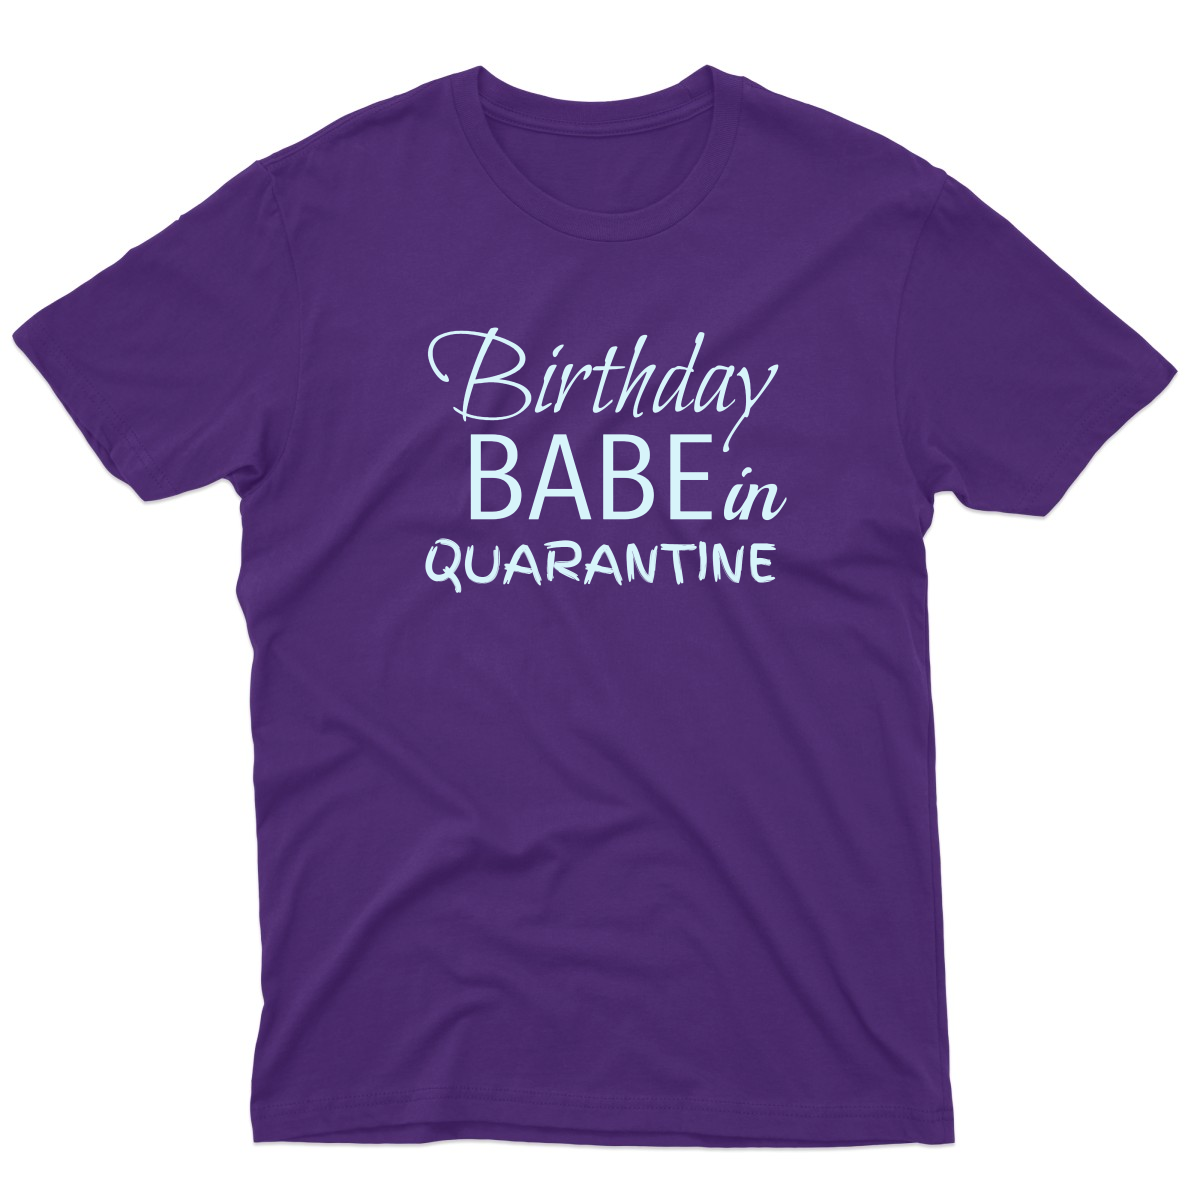 Birthday Babe in Quarantine Men's T-shirt | Purple